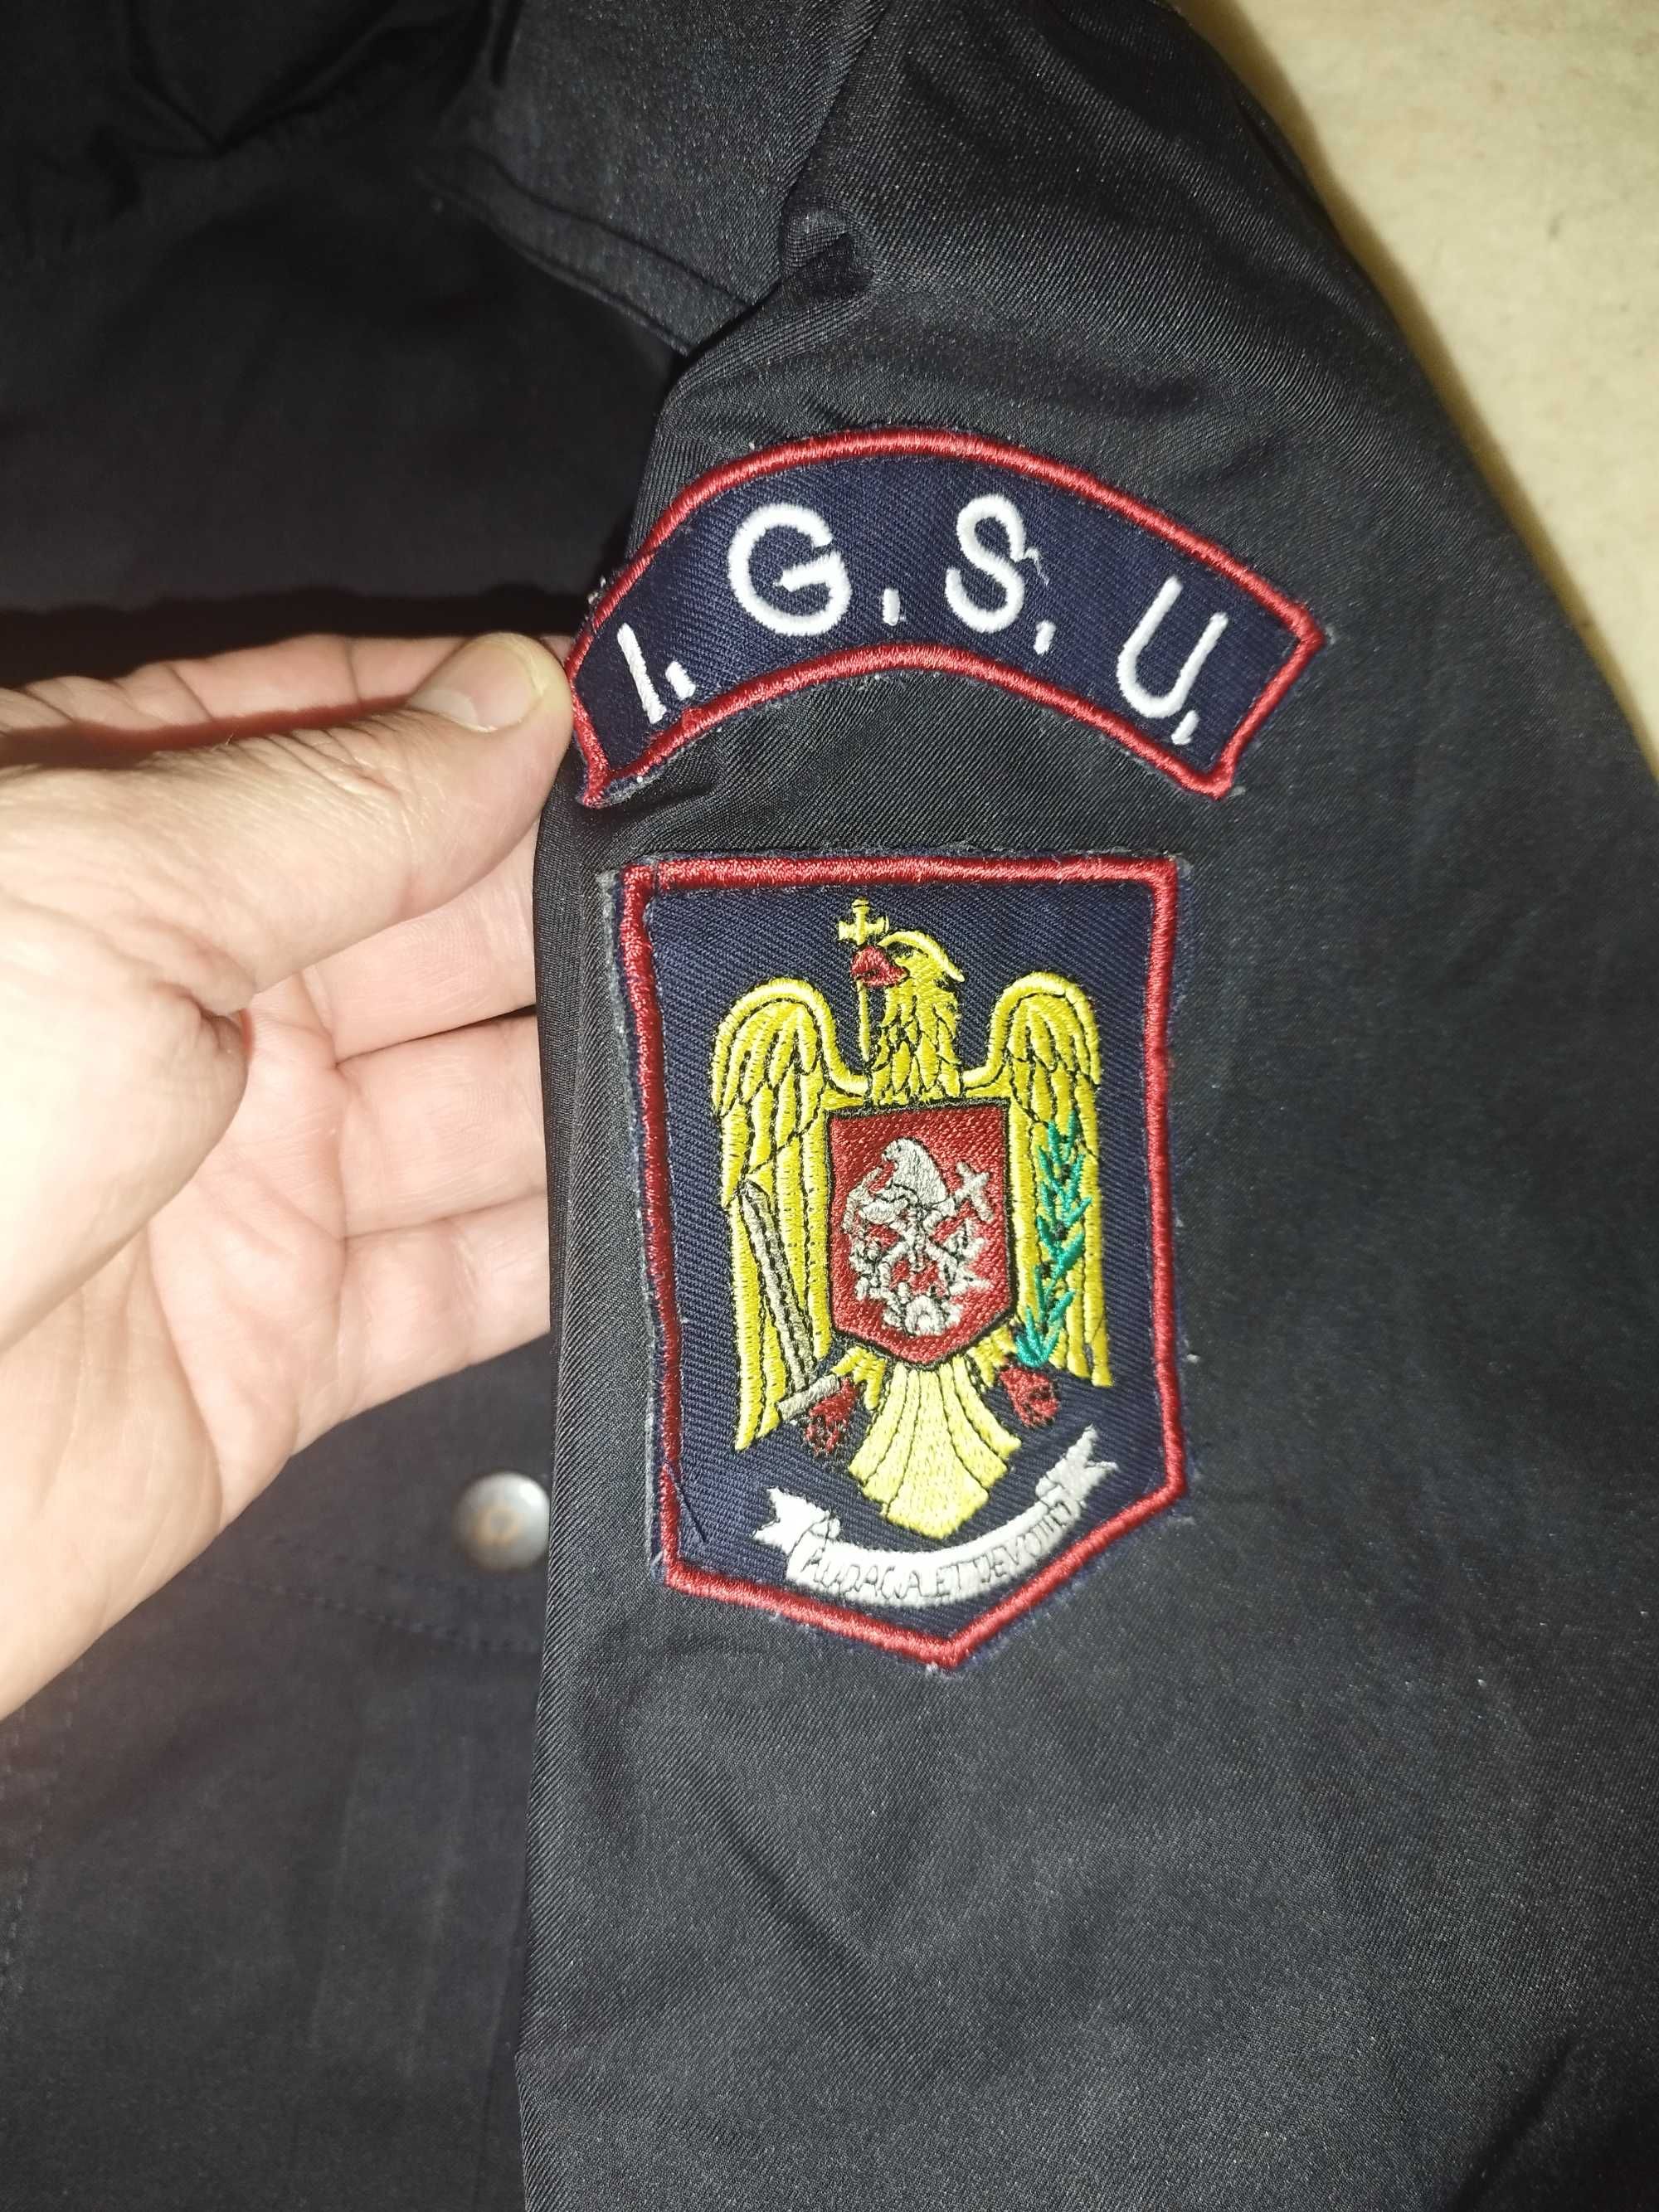 jacheta costum instructie  IGSU pompieri marimea XL